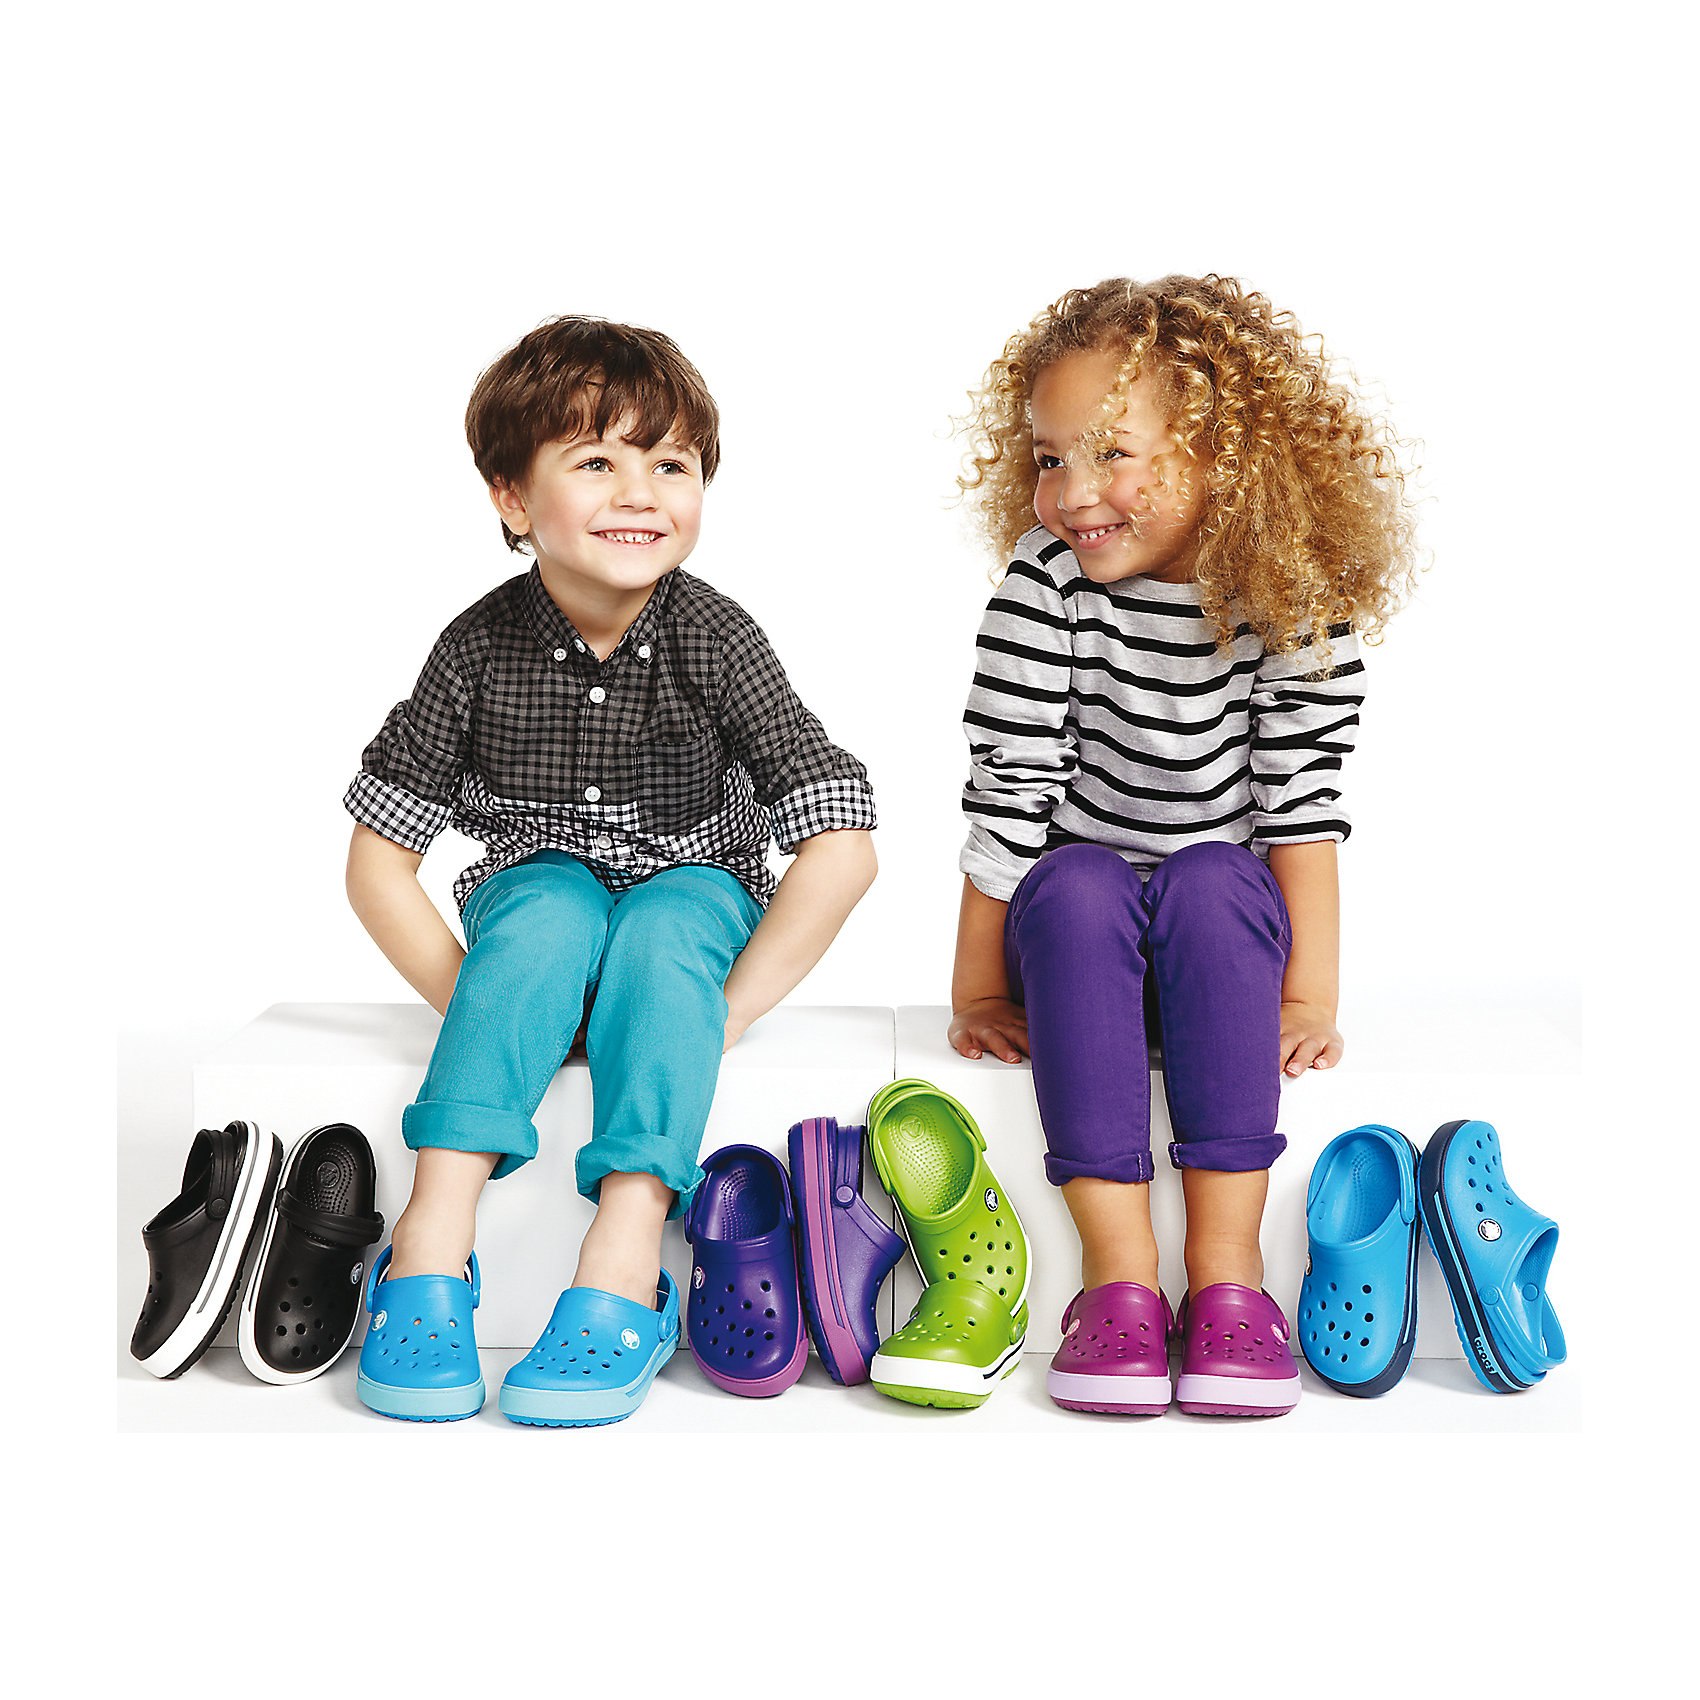 I m wearing shoes. Обувь для детей. Одежда и обувь для детей. Детская обувь реклама. Модная одежда для детей.